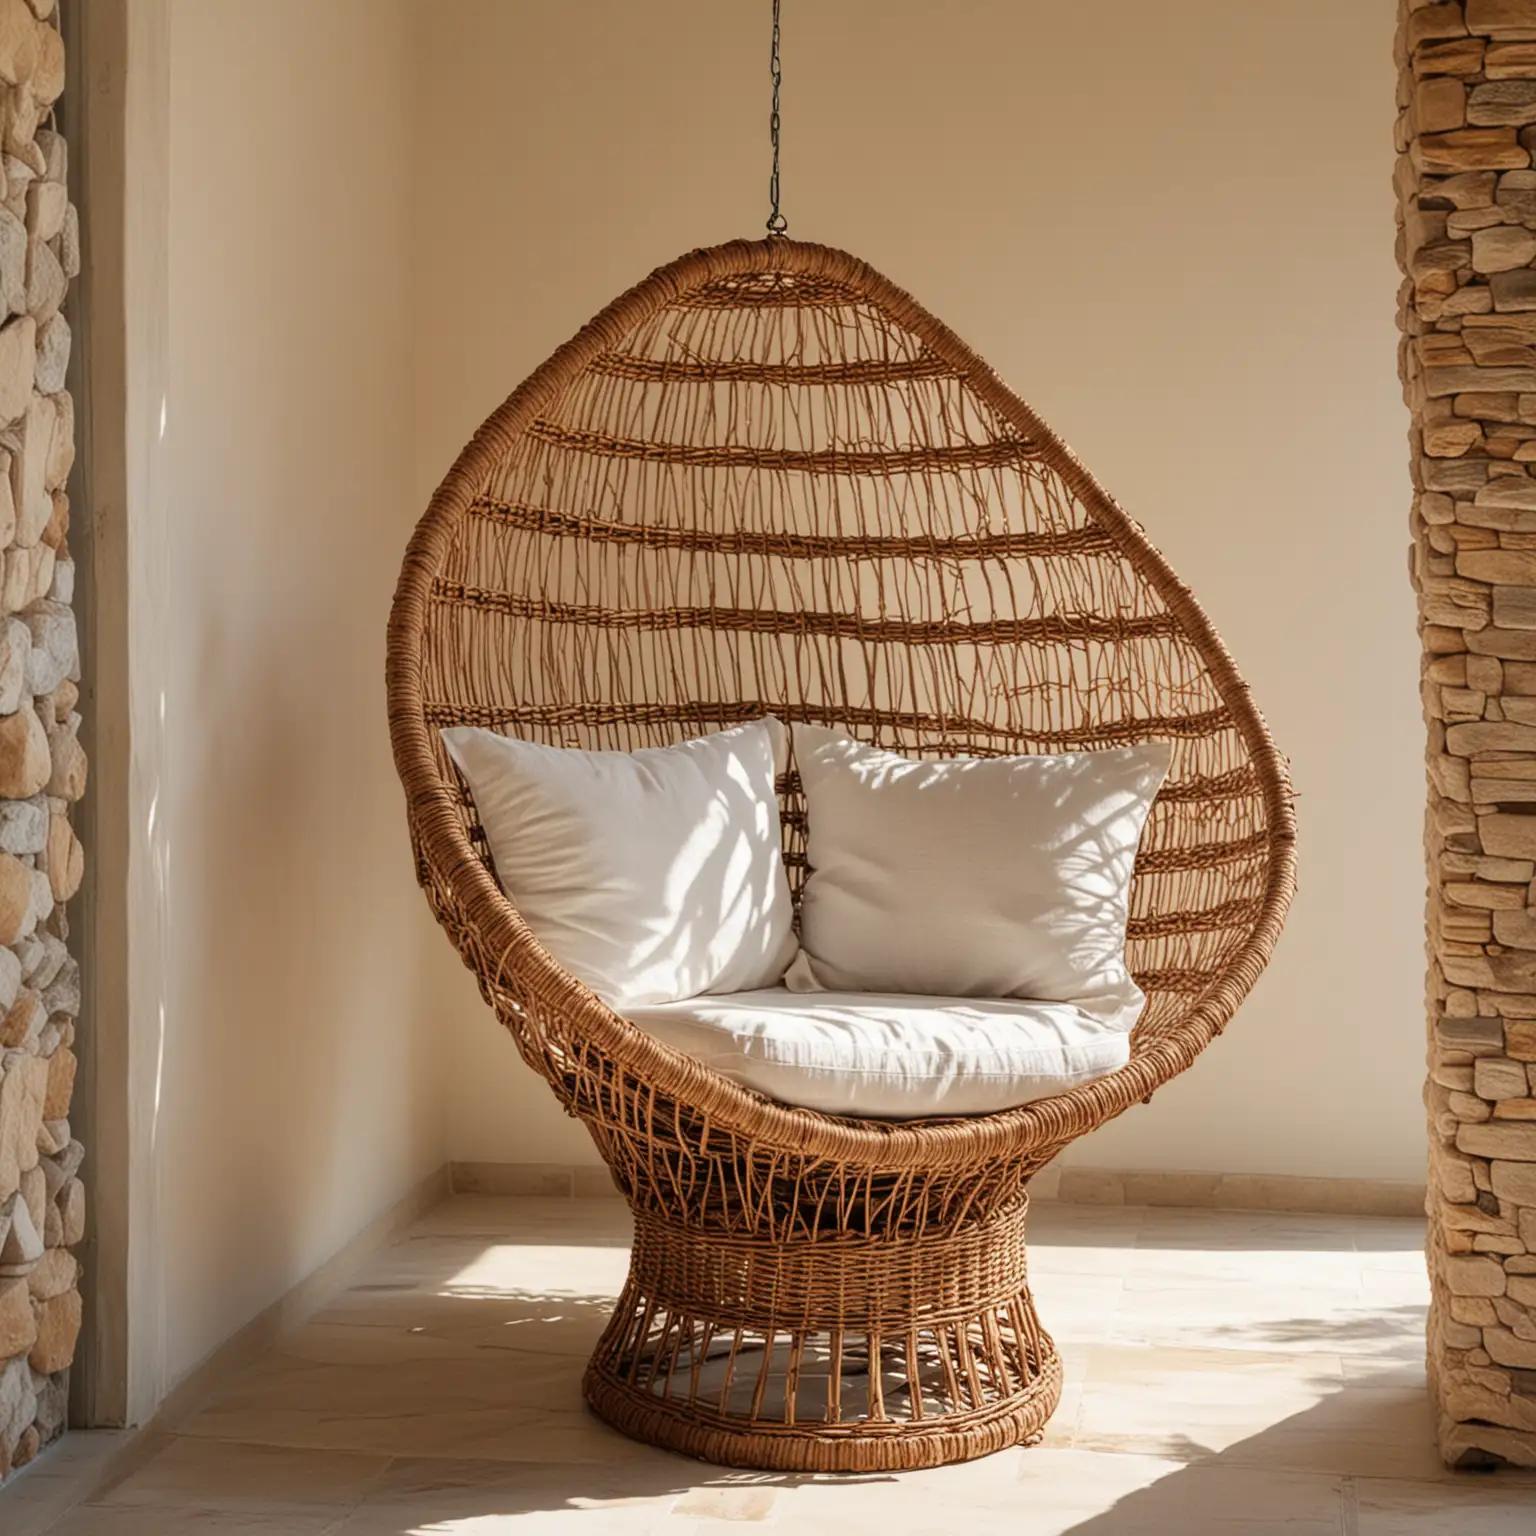 Luxury-Villa-Mediterranean-Sea-Wicker-Chair-with-Hanging-Wicker-Lampshade